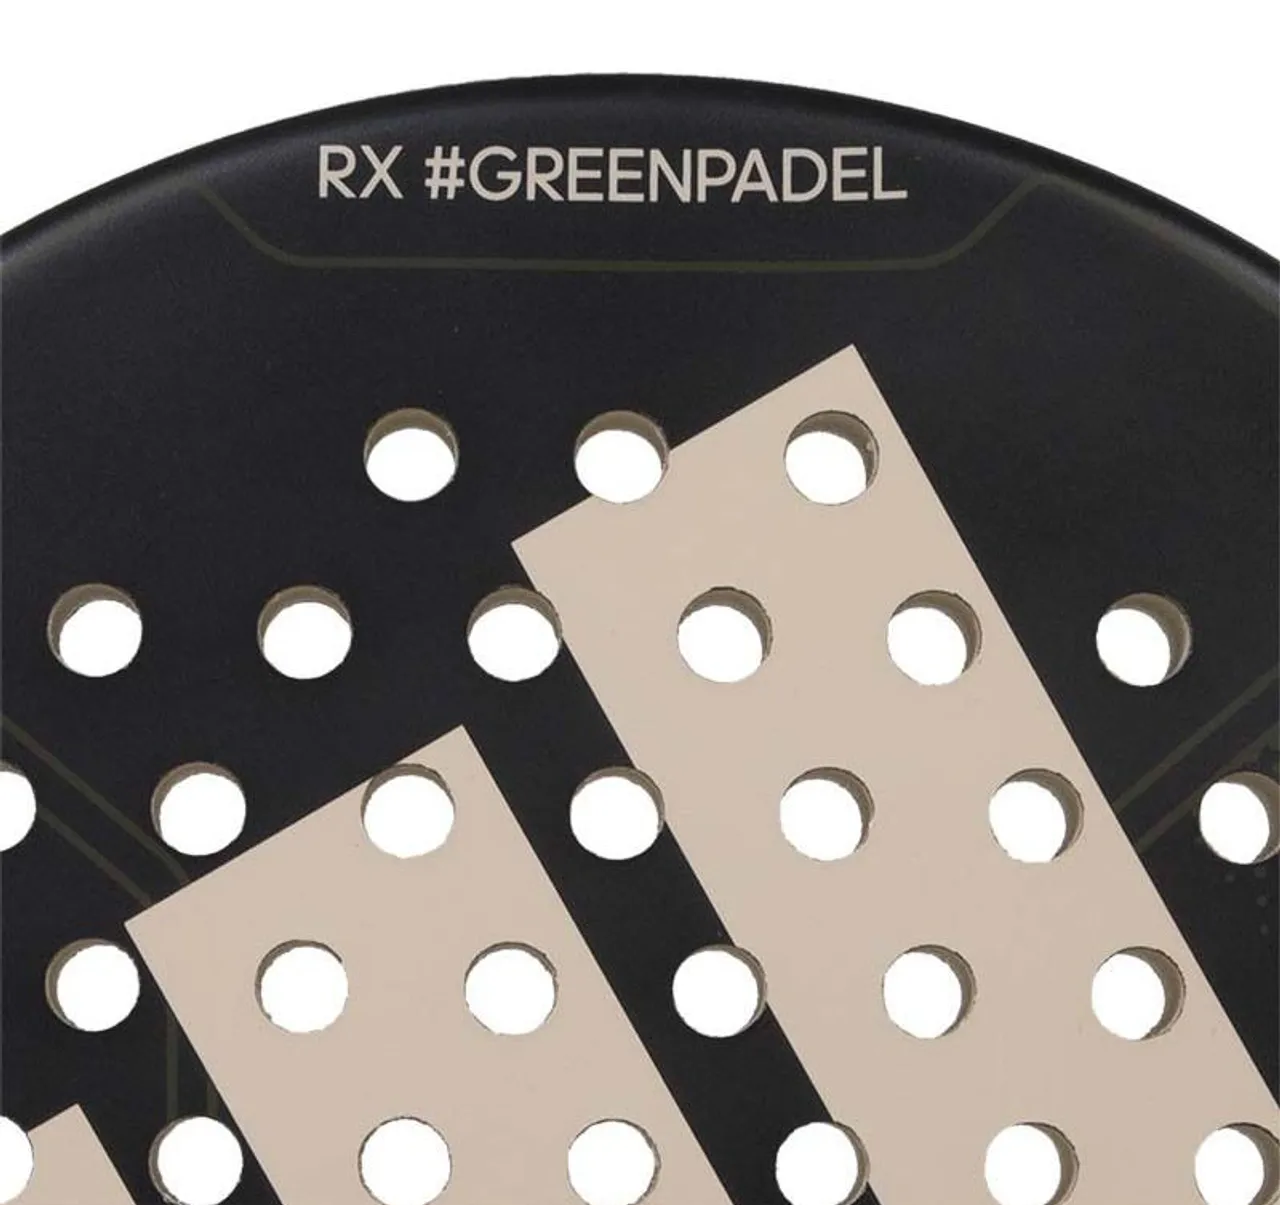 Adidas Rx #greenpadel